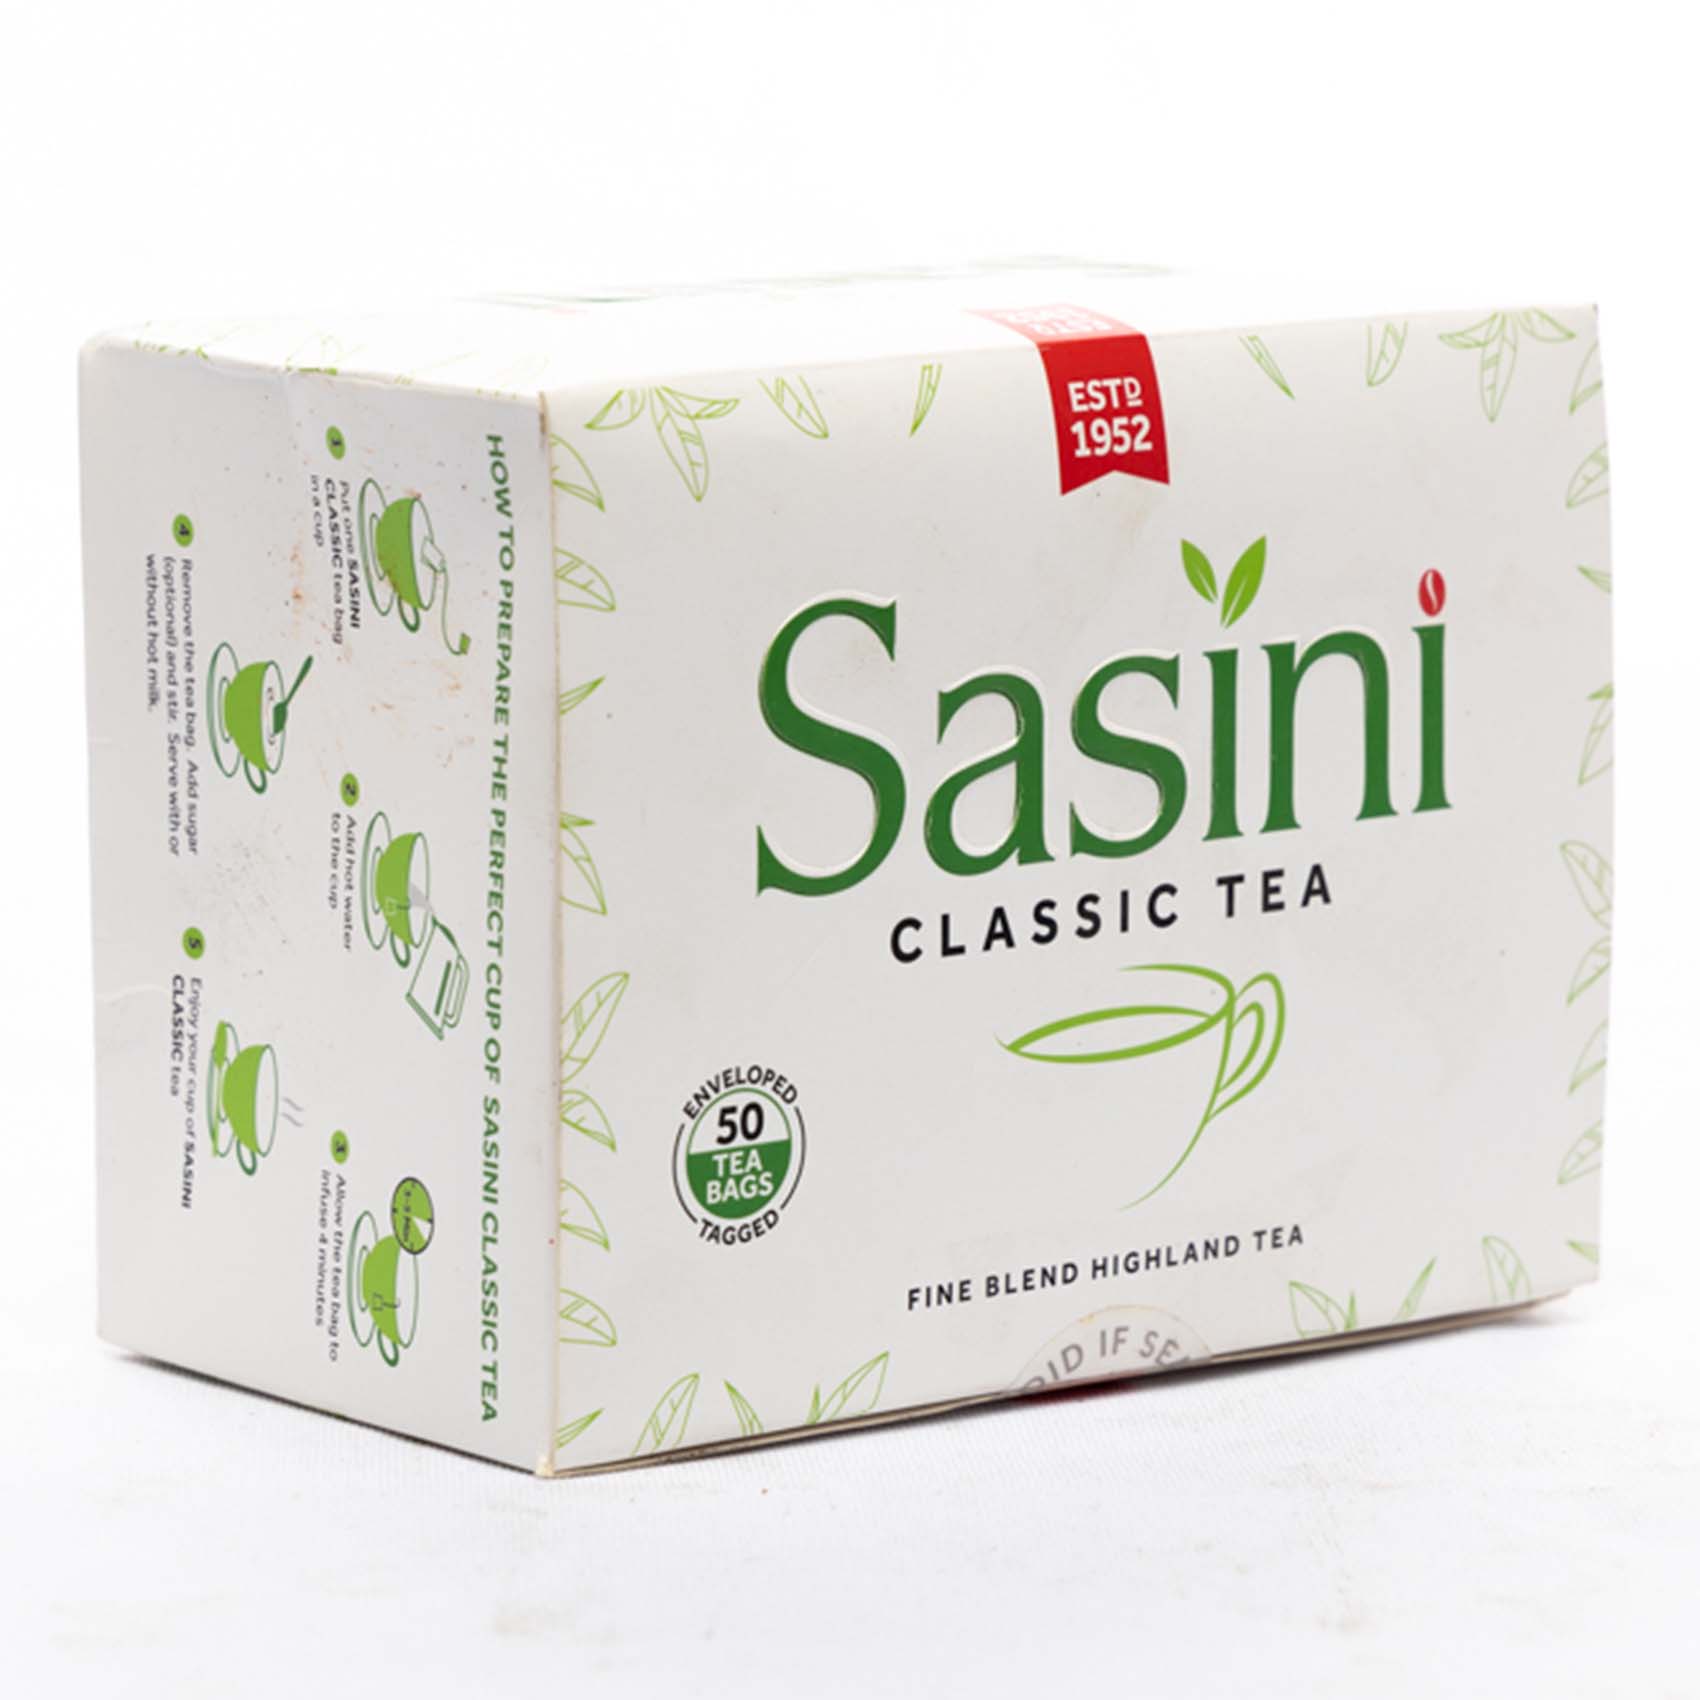 Sasini Classic Black Tea Bags Pack of 50